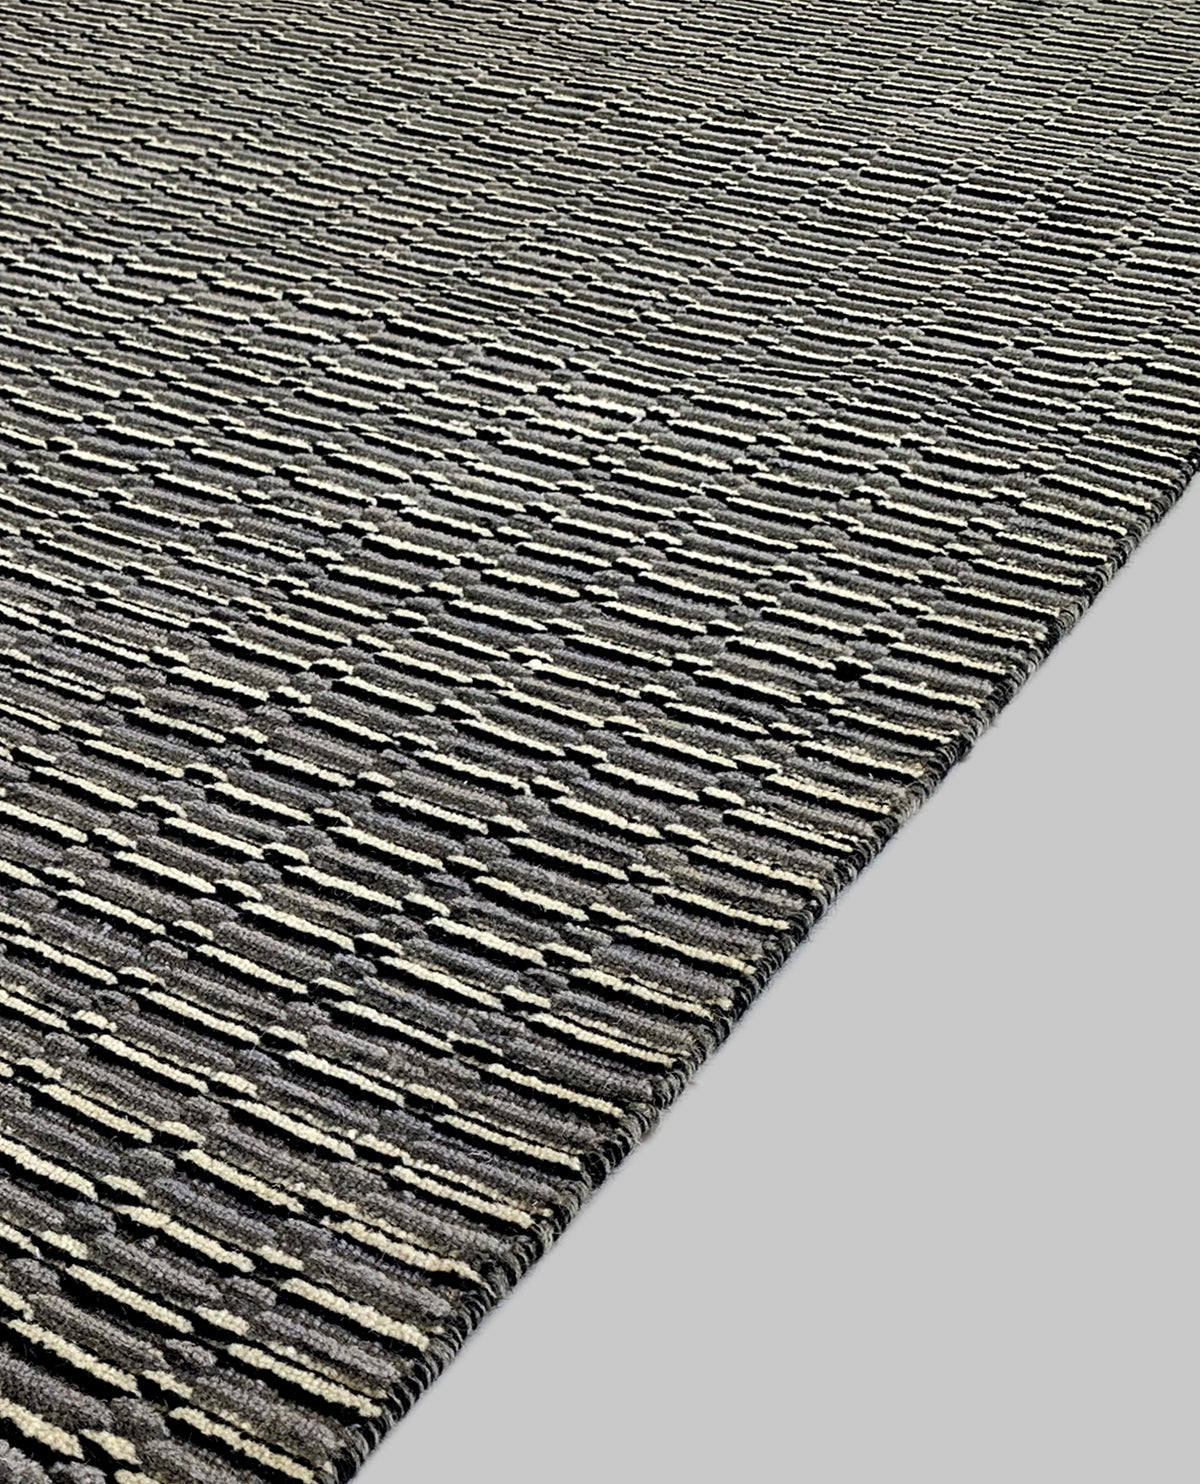 Rugslane Plain Textured Woolen Box Design Grey Carpet 4.6ft X 6.6ft